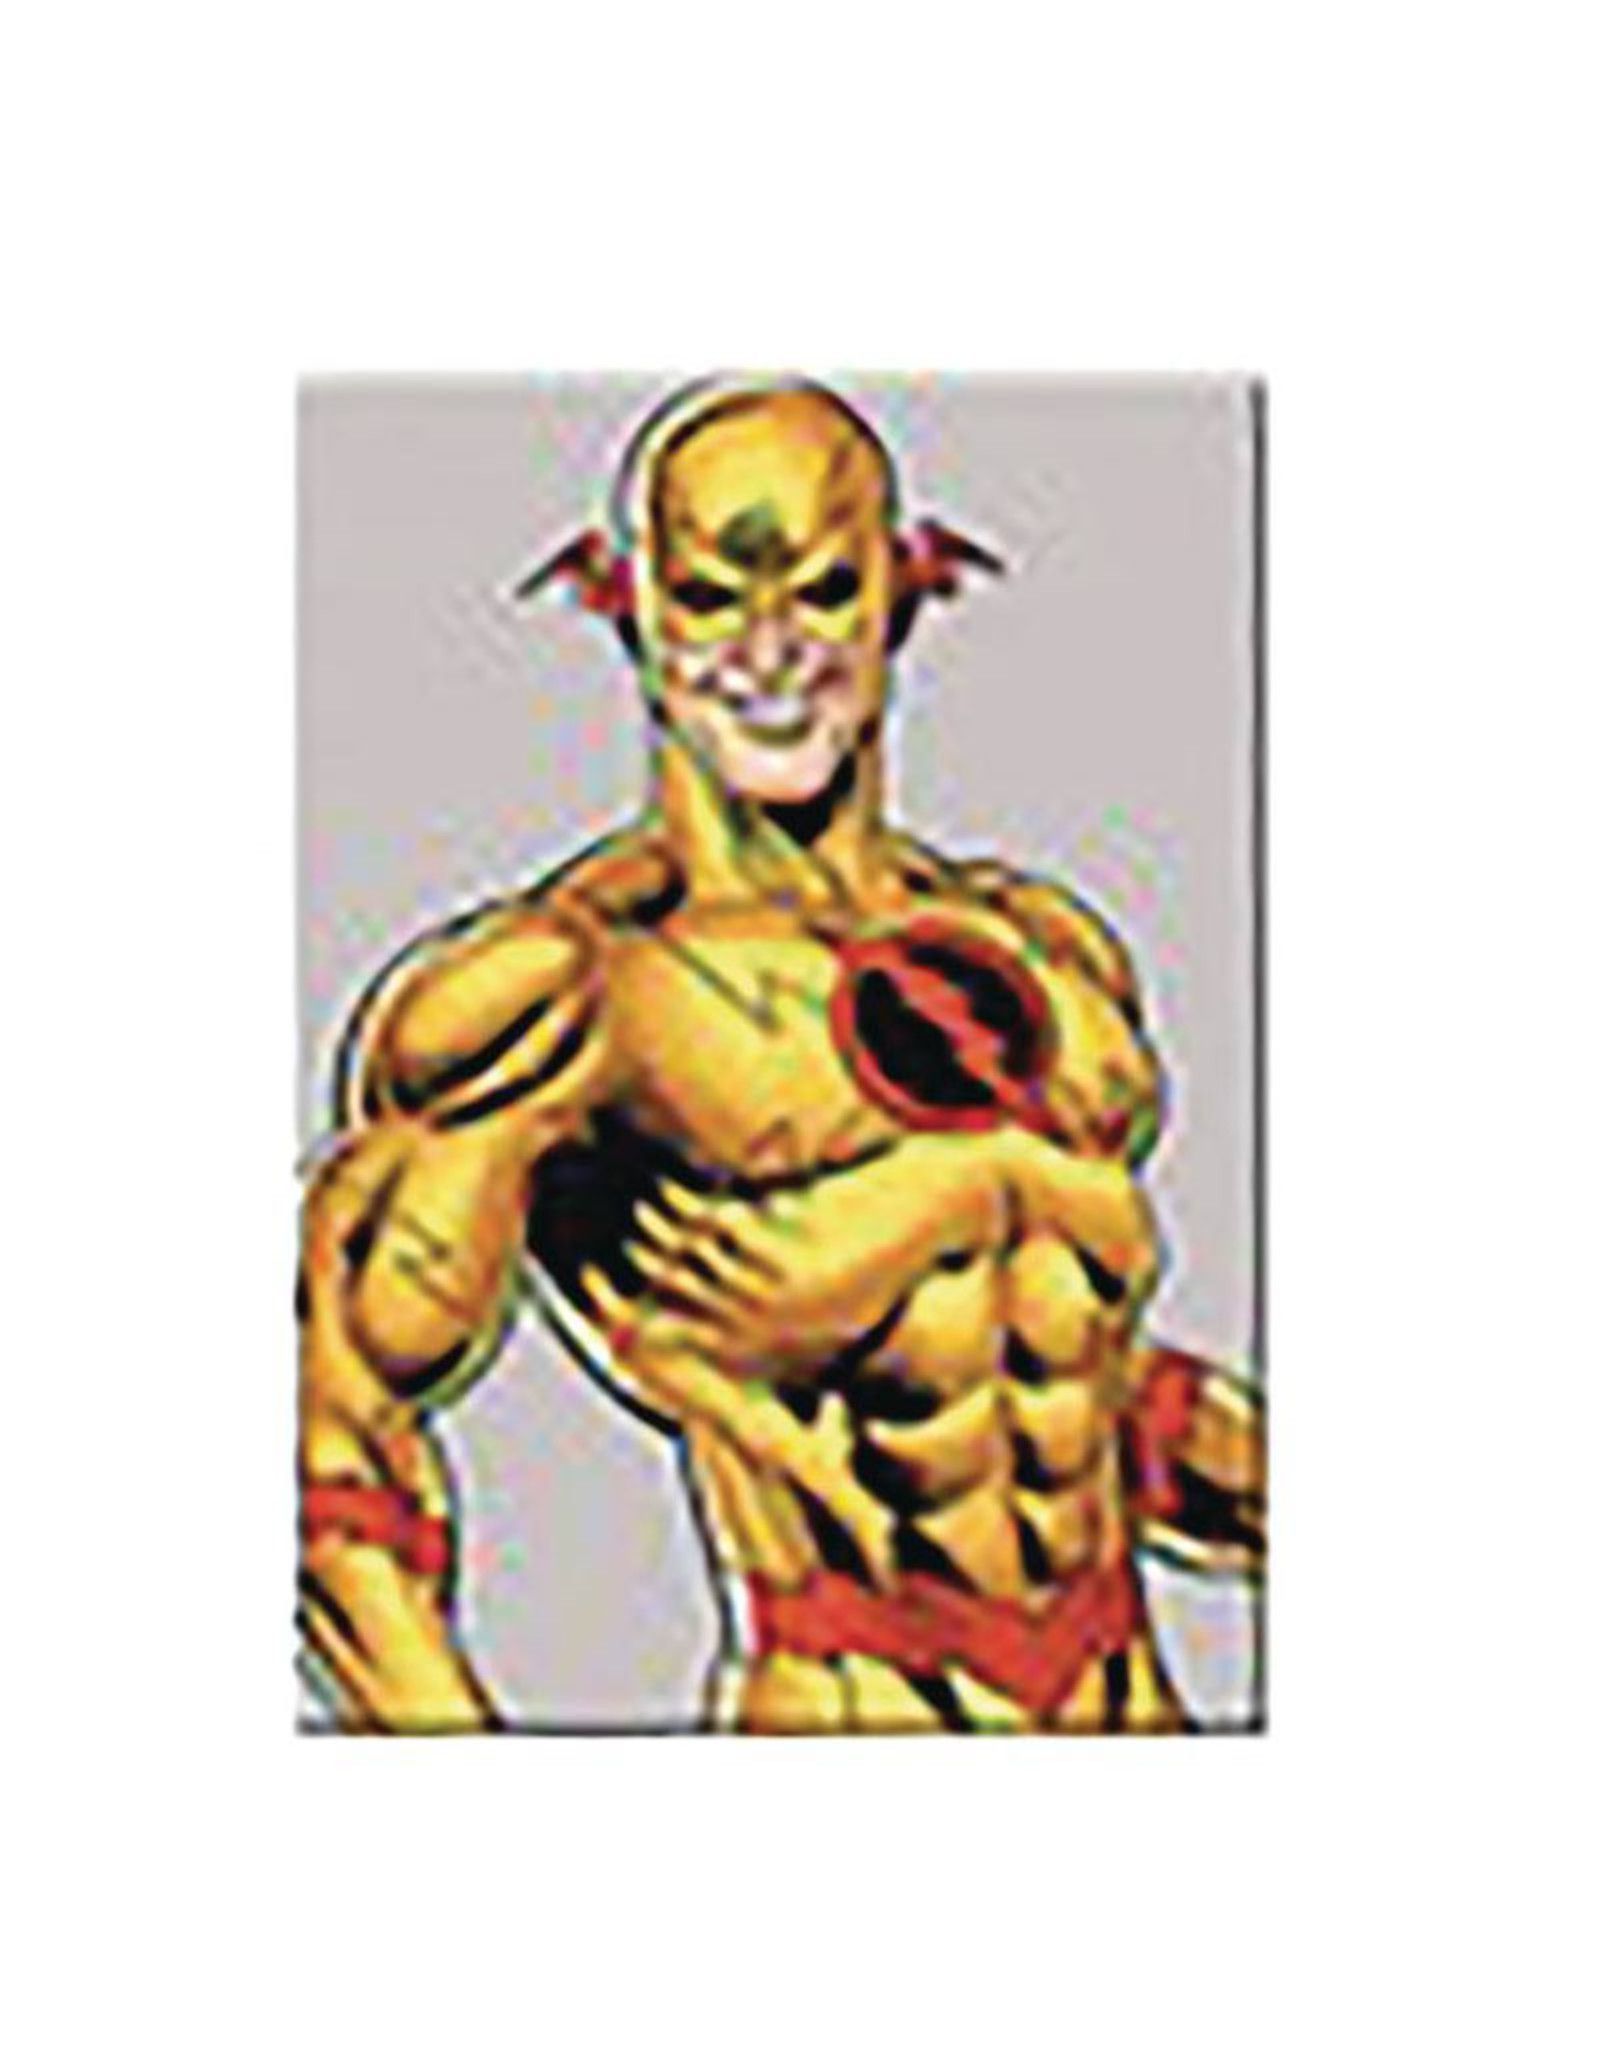 Ata-Boy DC Villains Reverse Flash Magnet